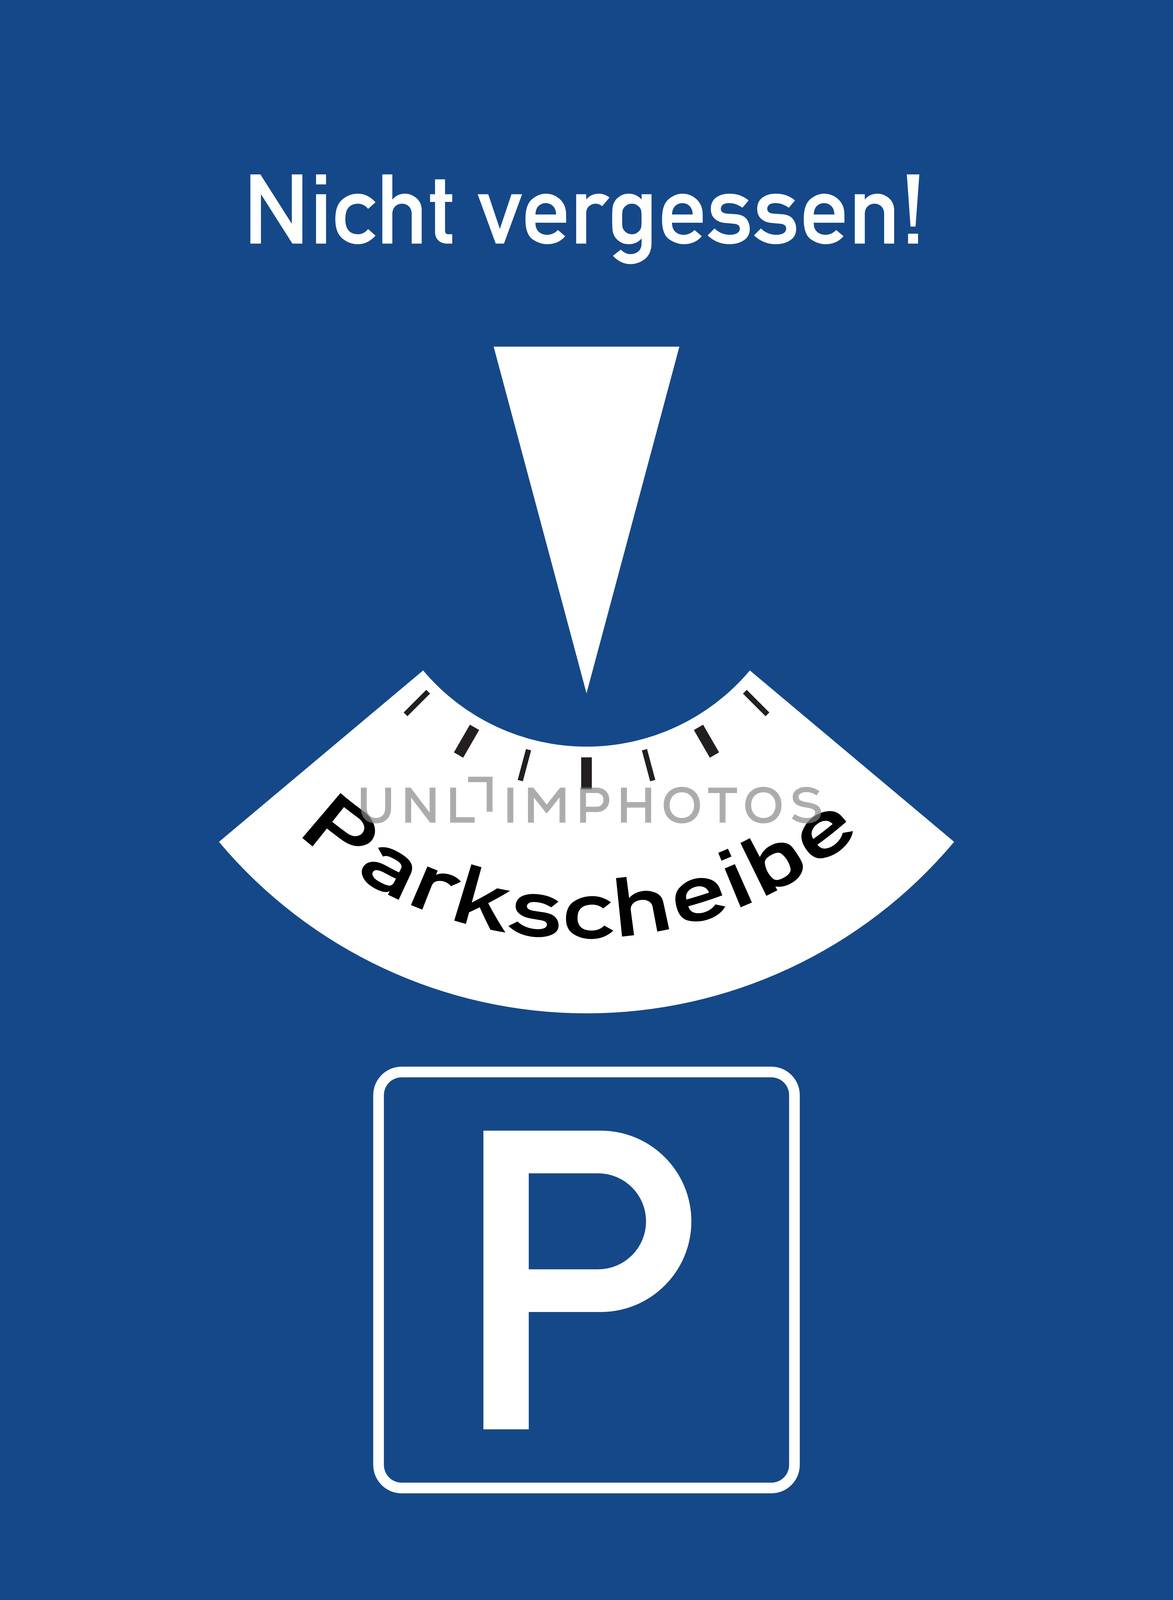 A parking disc with the german words for Not forget! Parking disc (Nicht vergessen! Parkscheibe)